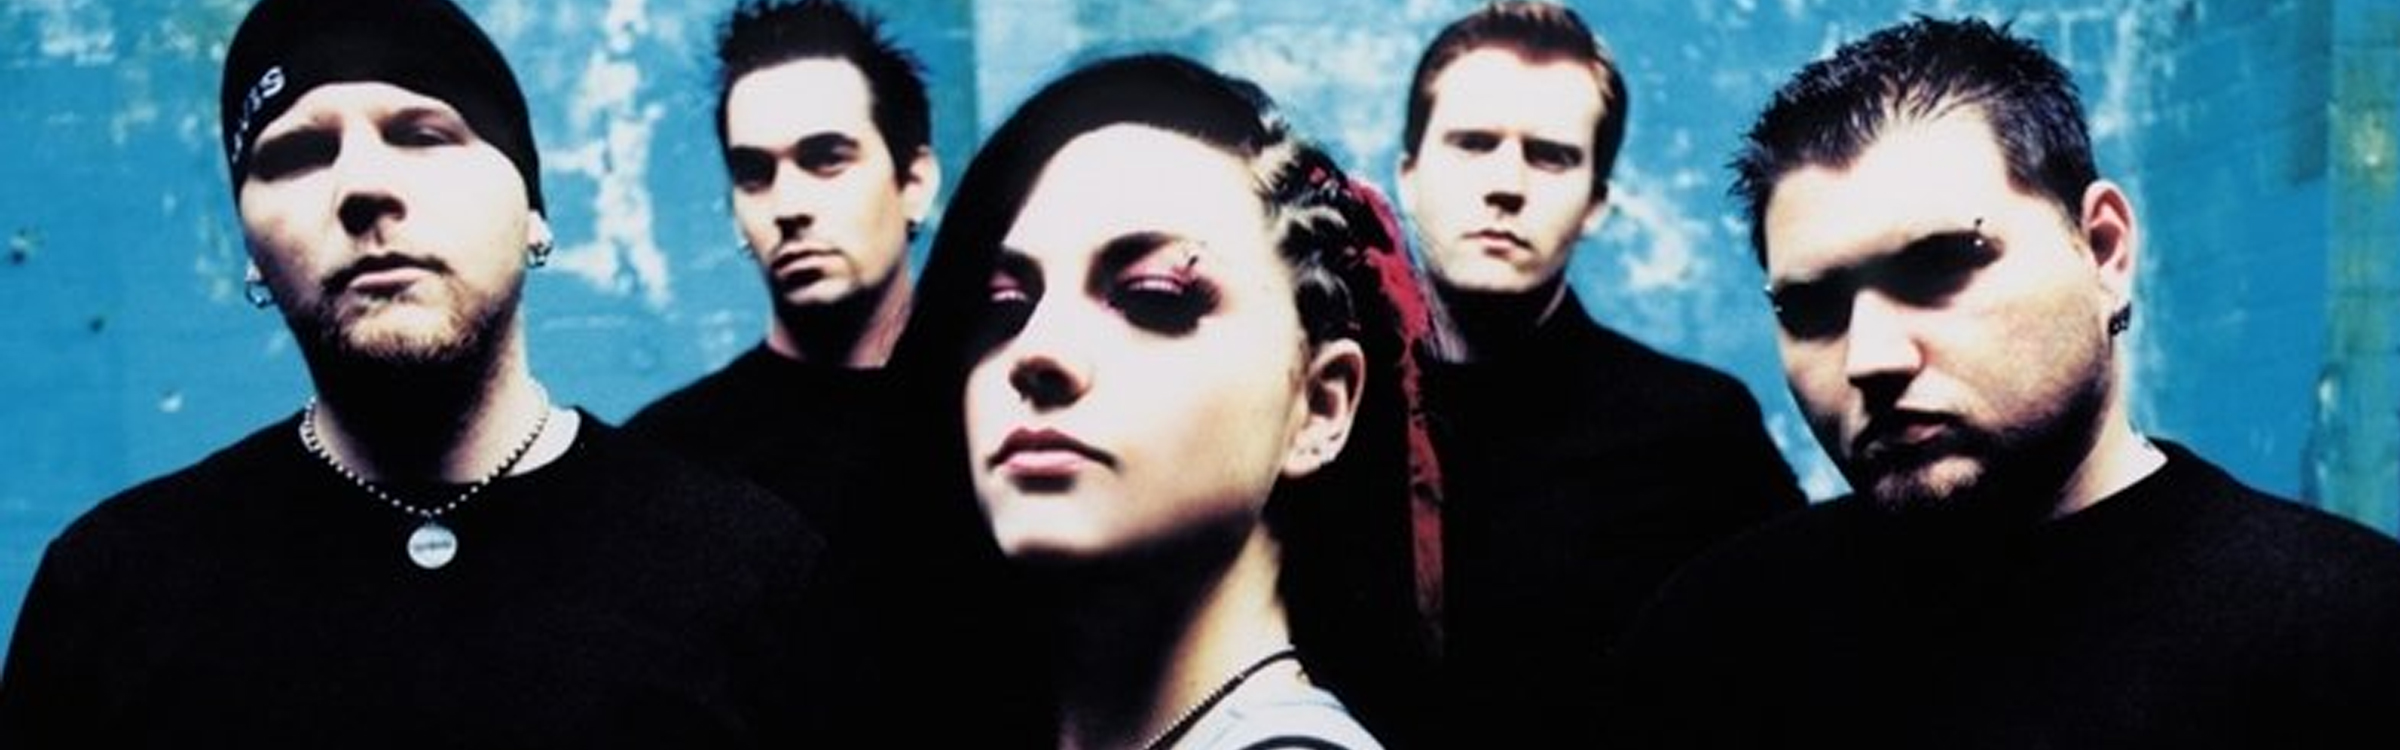 Evanescence header